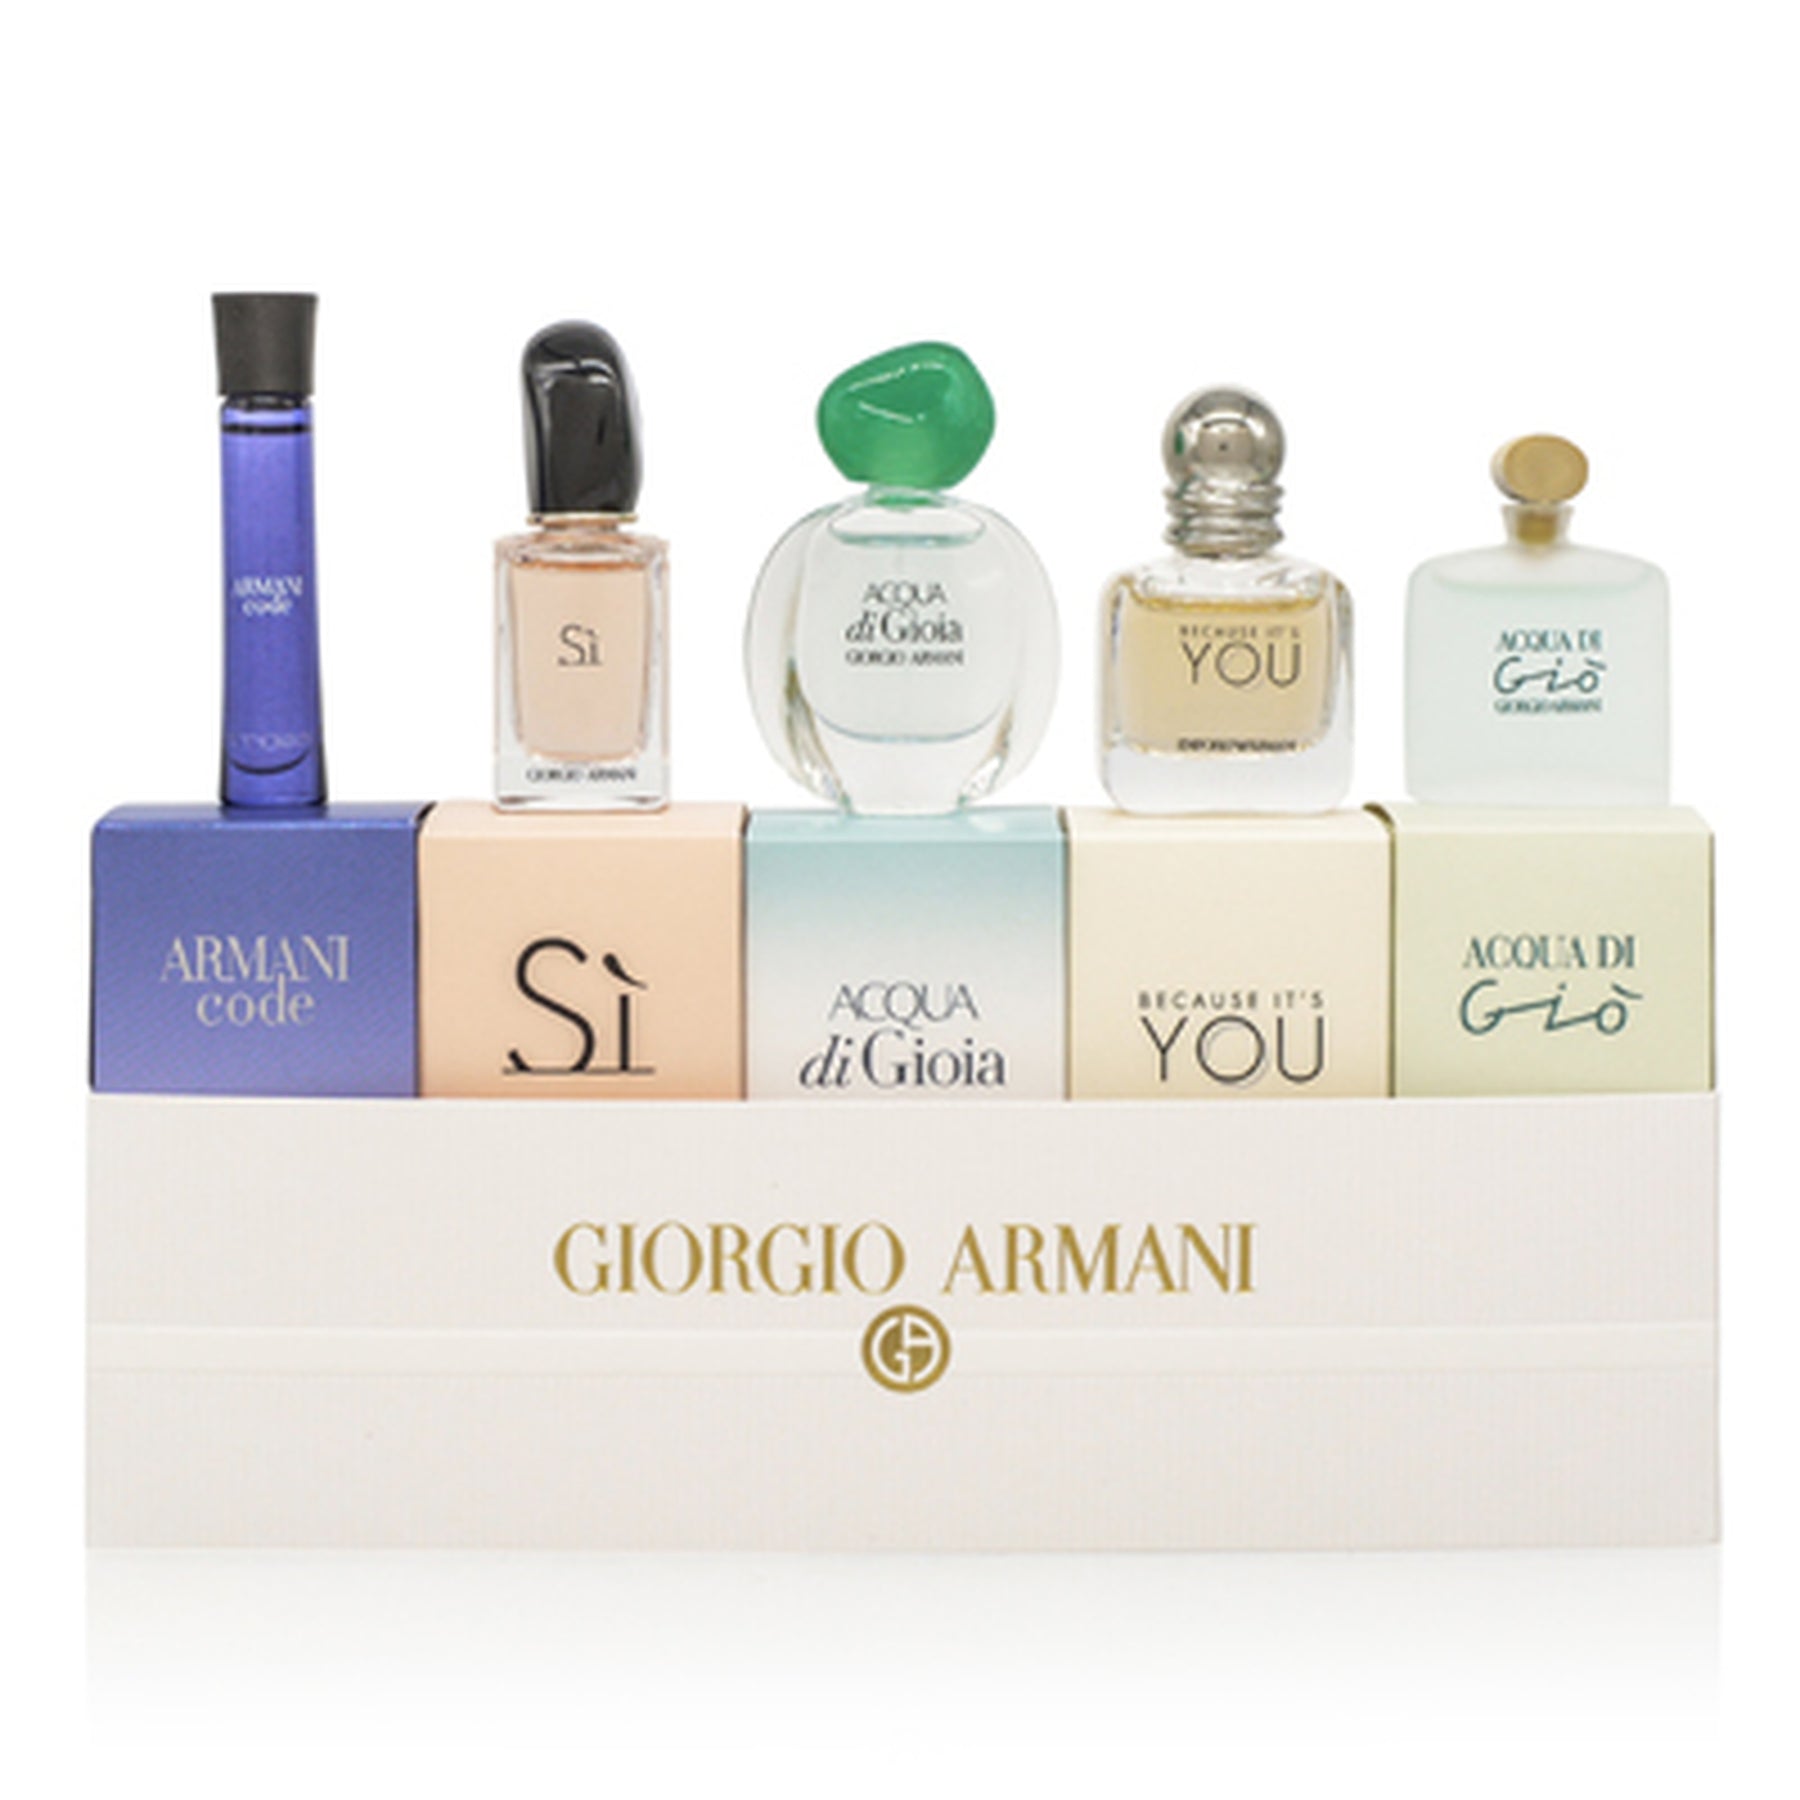 Giorgio Armani Mini Set Perfume For Women Travel Exclusive Eau De